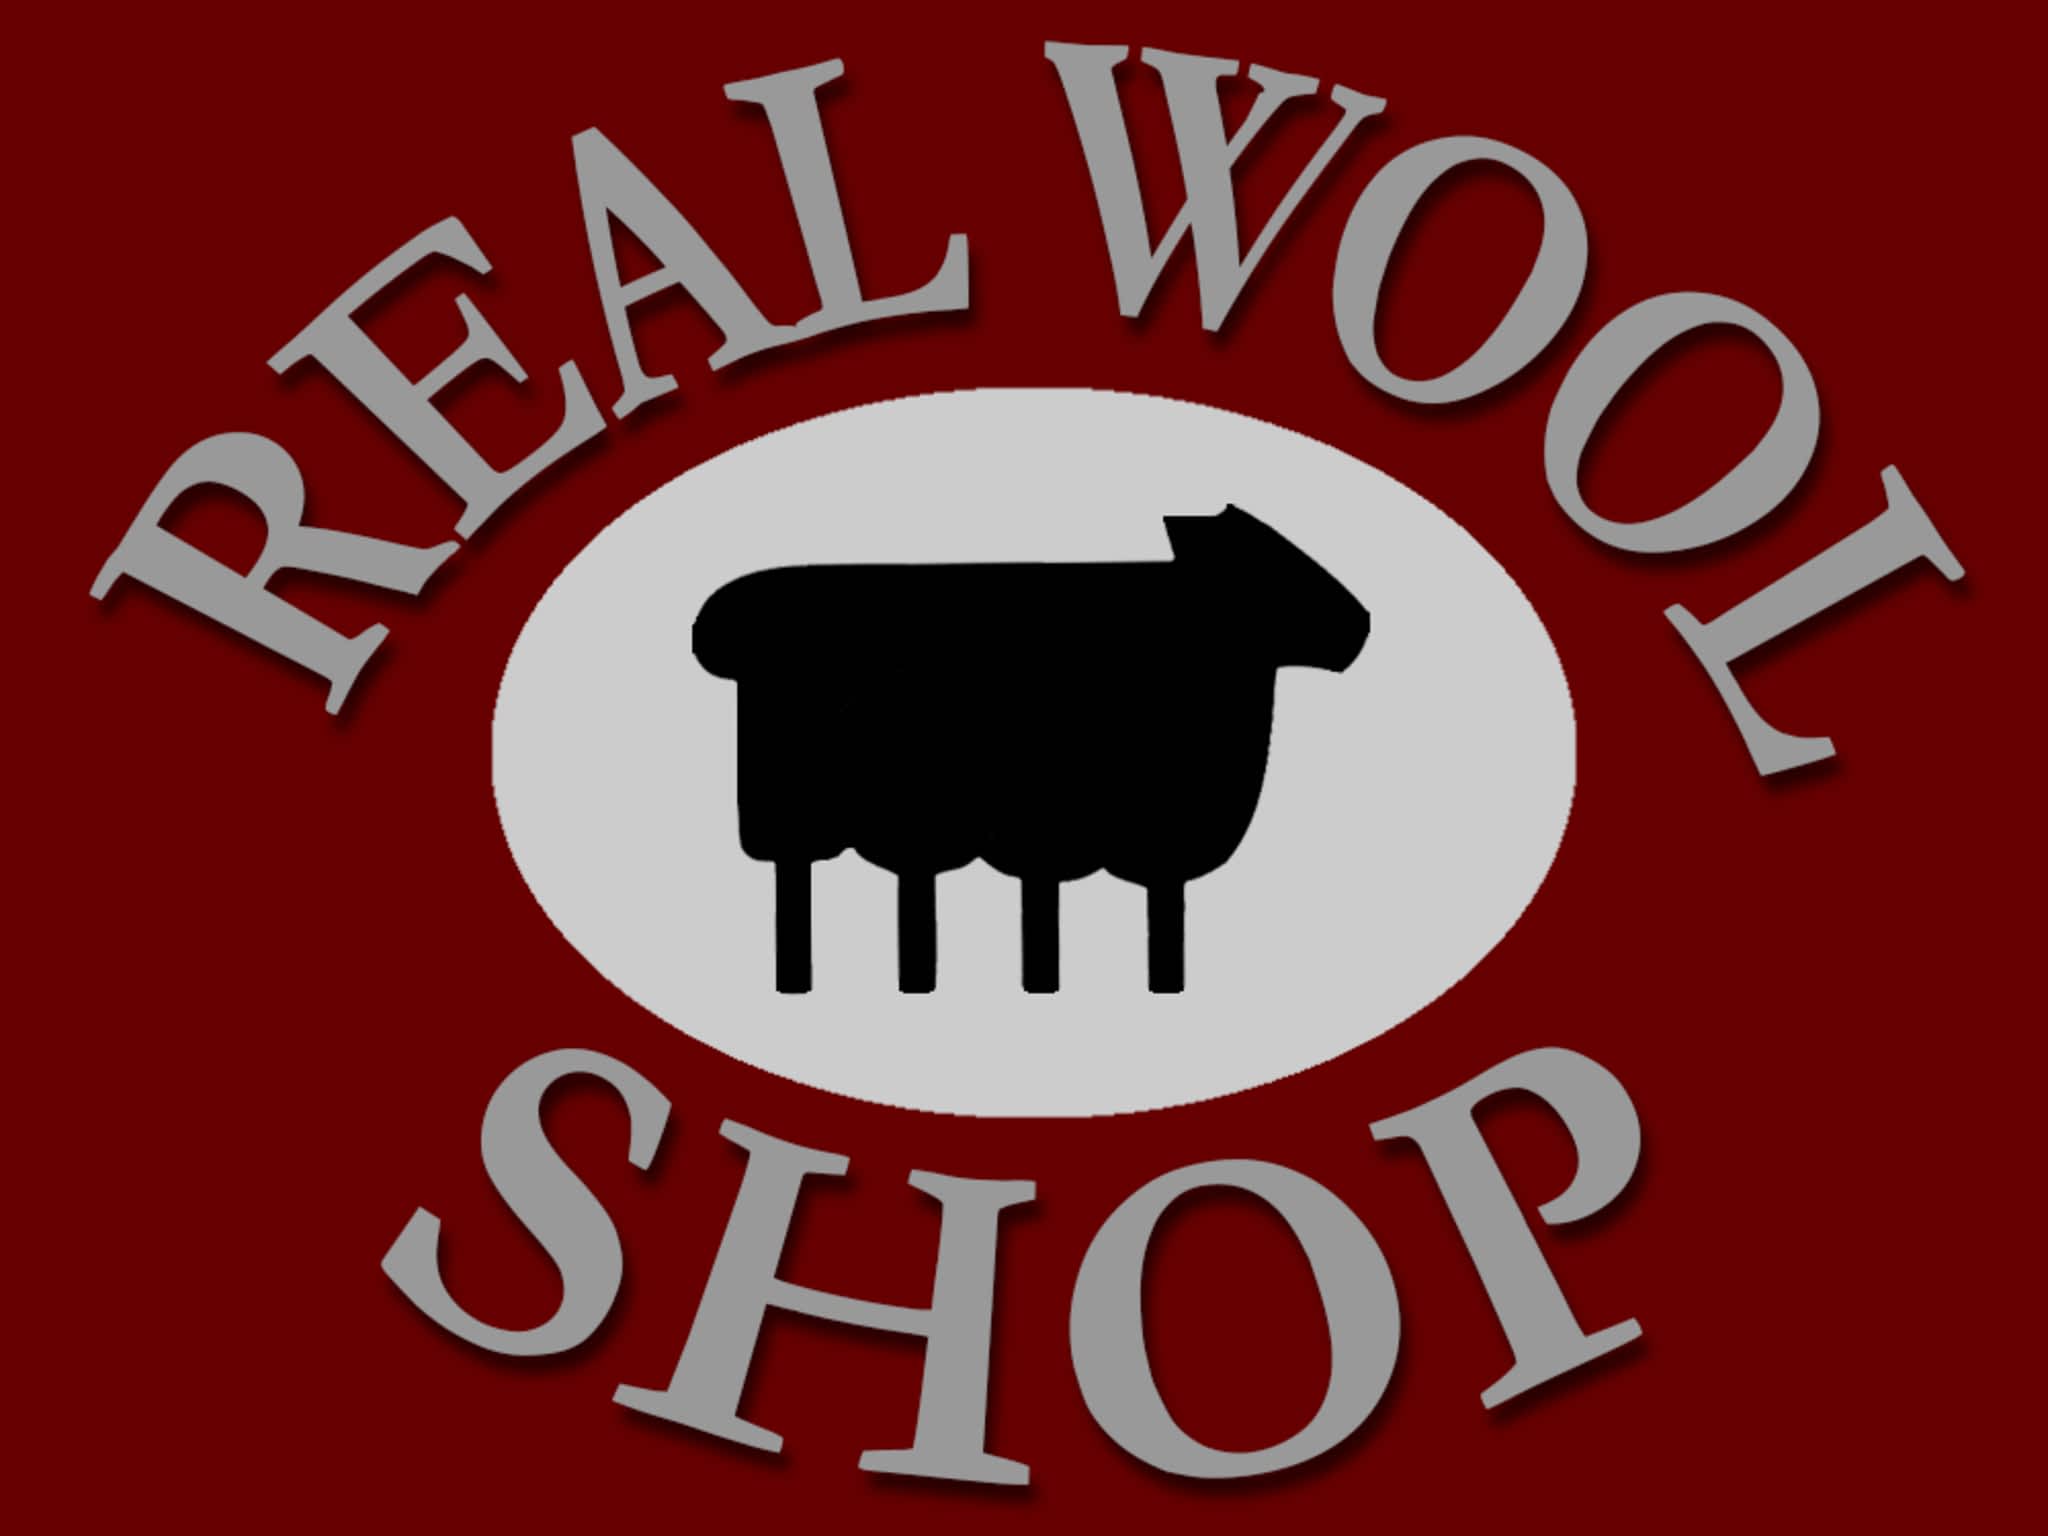 photo Real Wool Shop